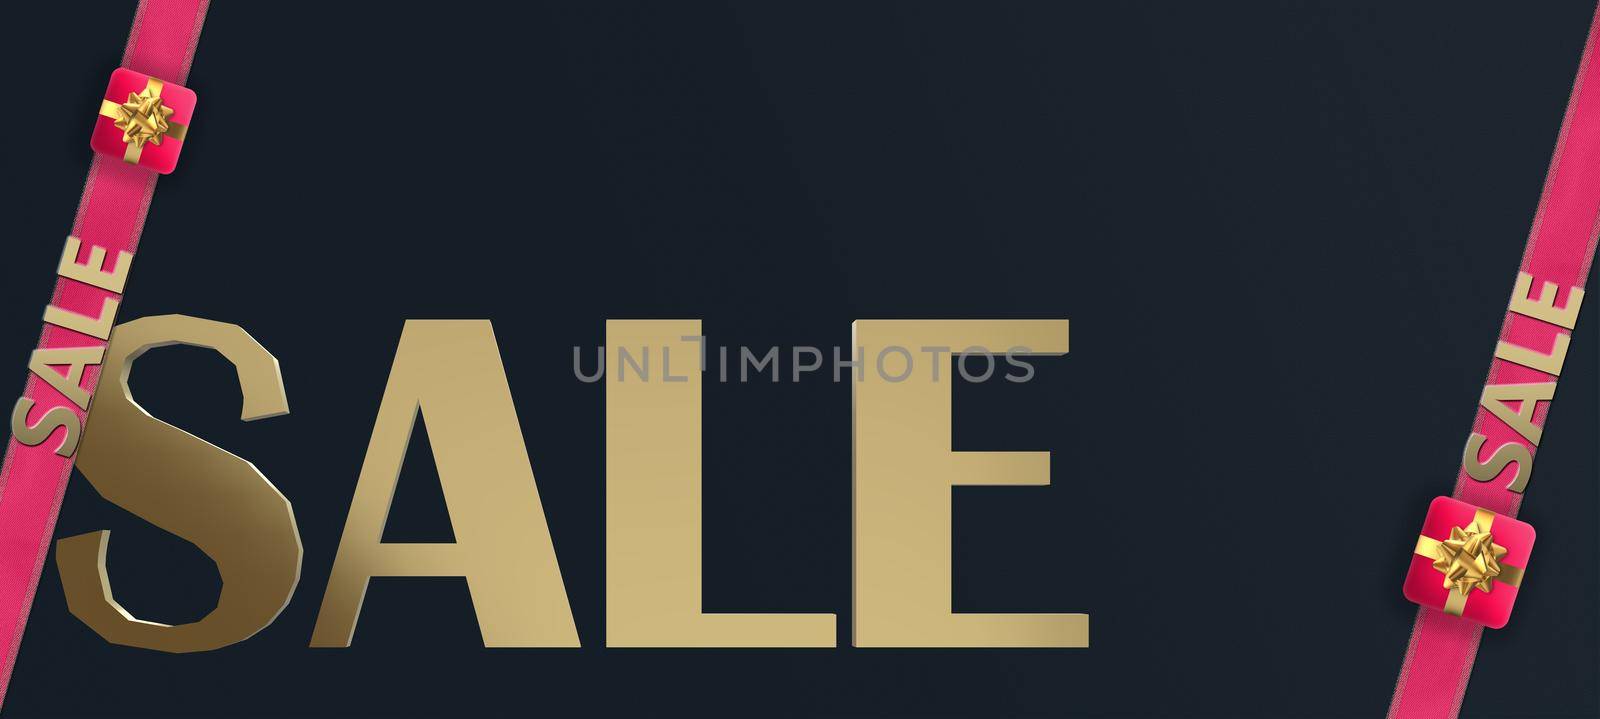 Horizontal Sales banner. Word Sale, pink ribbons on blue black background. 3D rendering. Modern sale background